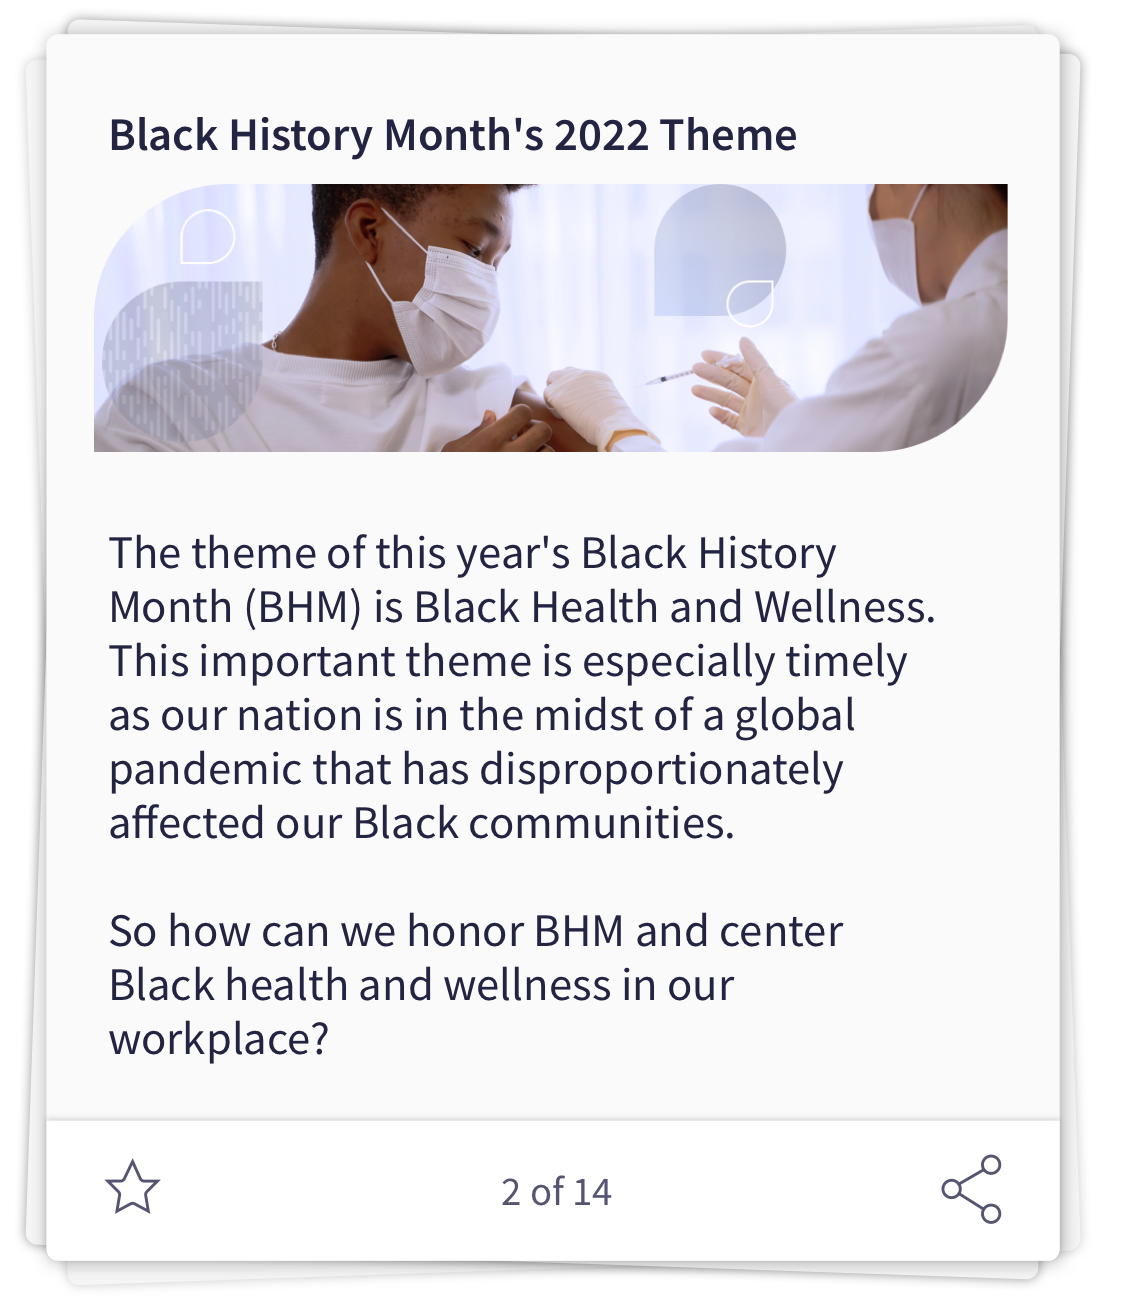 Black Health and Wellness secondary image